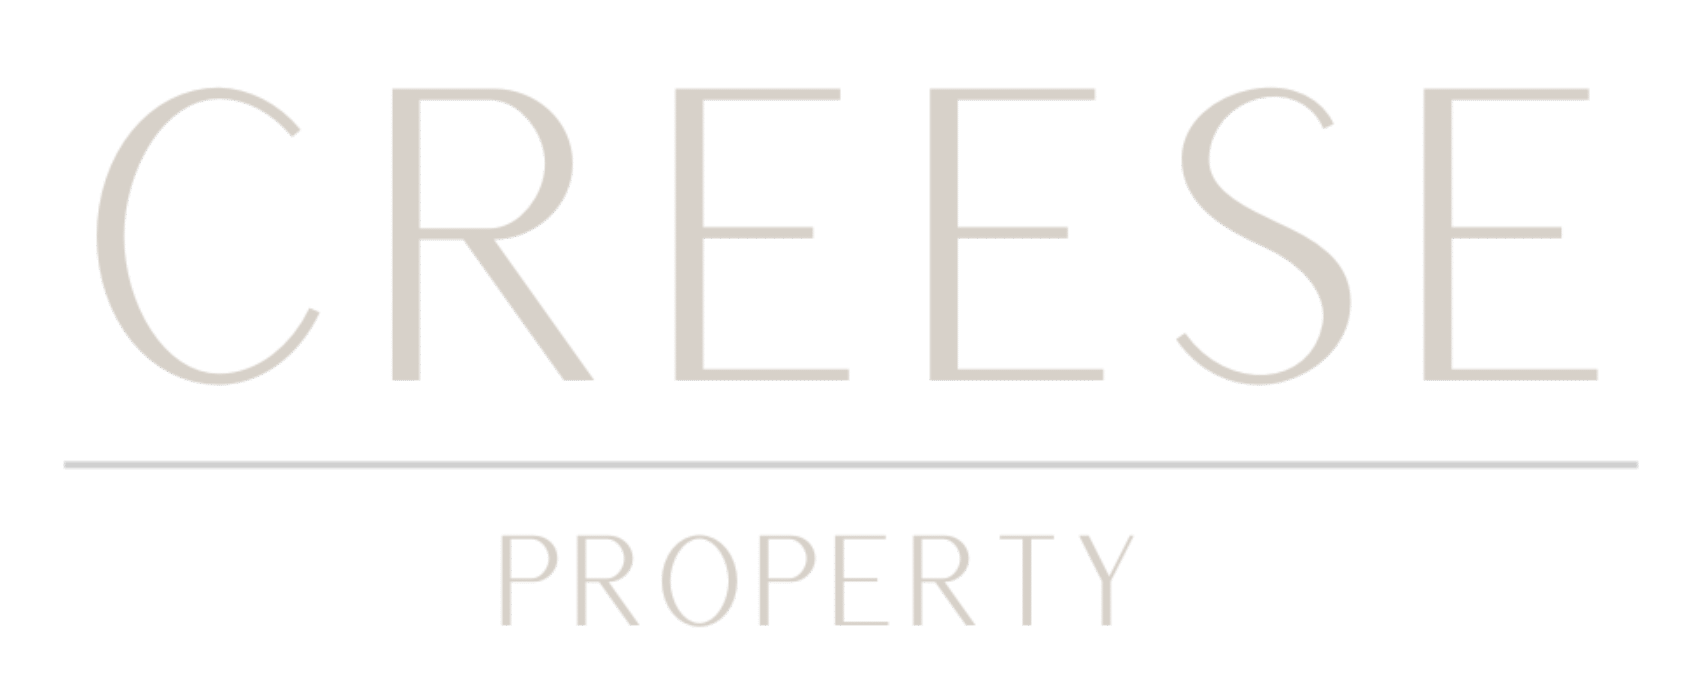 Creese Property Logo-Beige